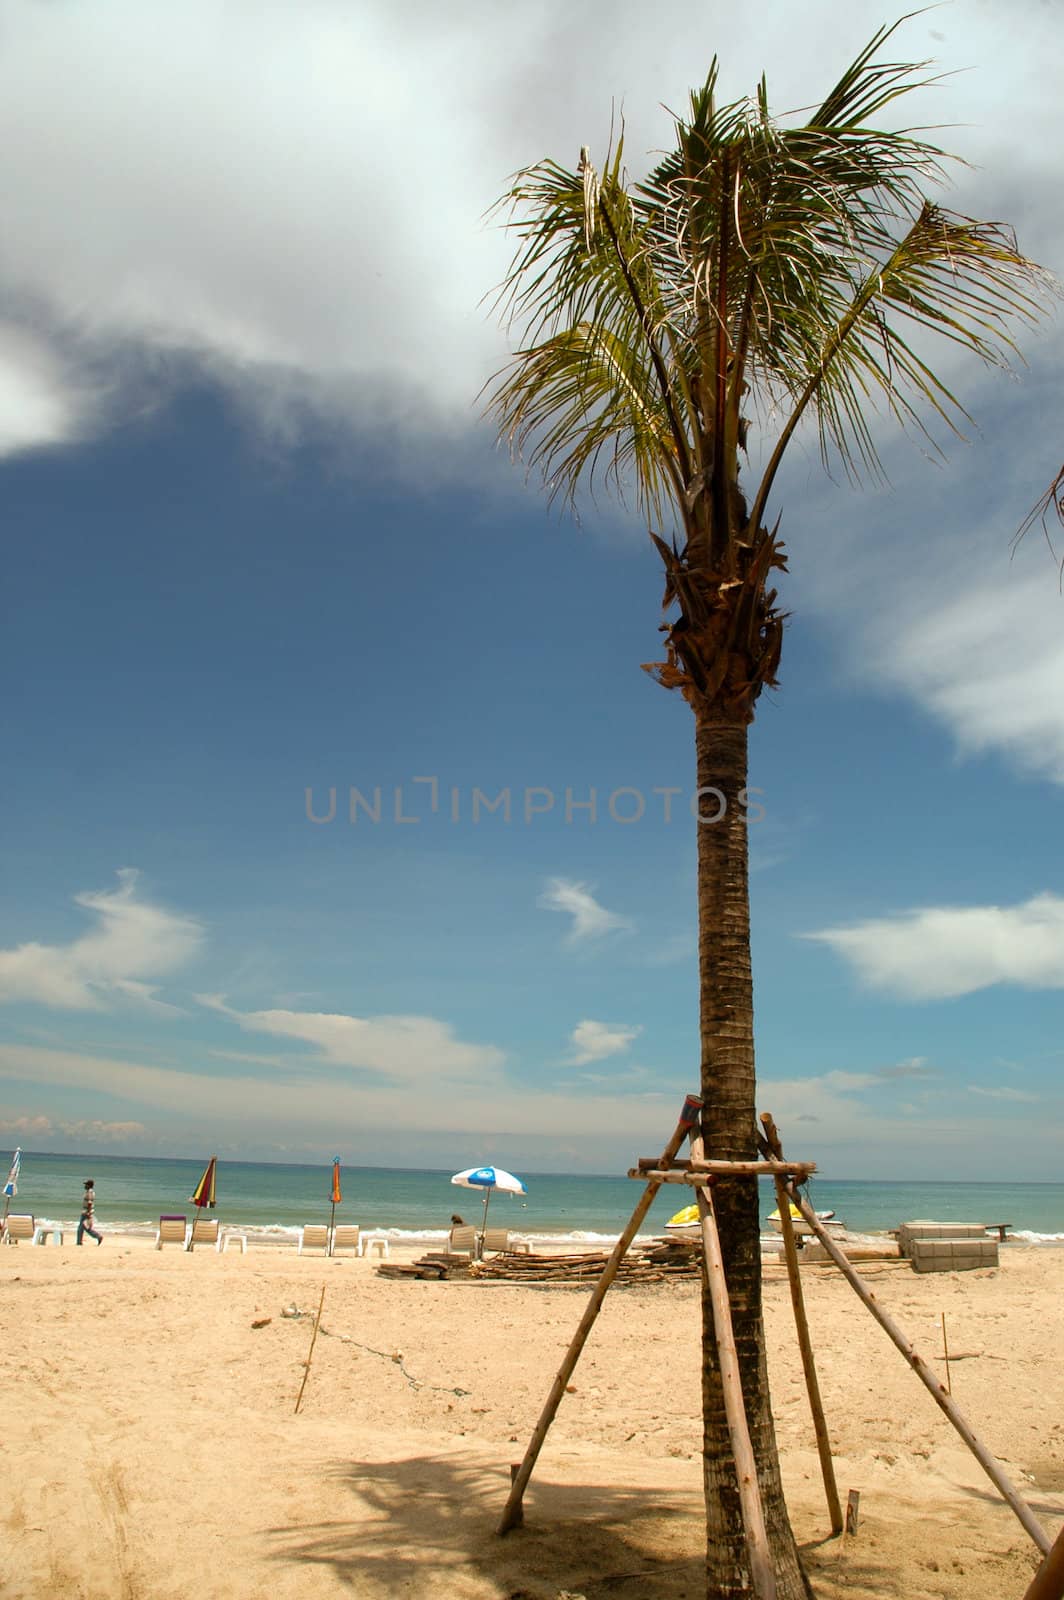 Beach and palmtree by cfoto